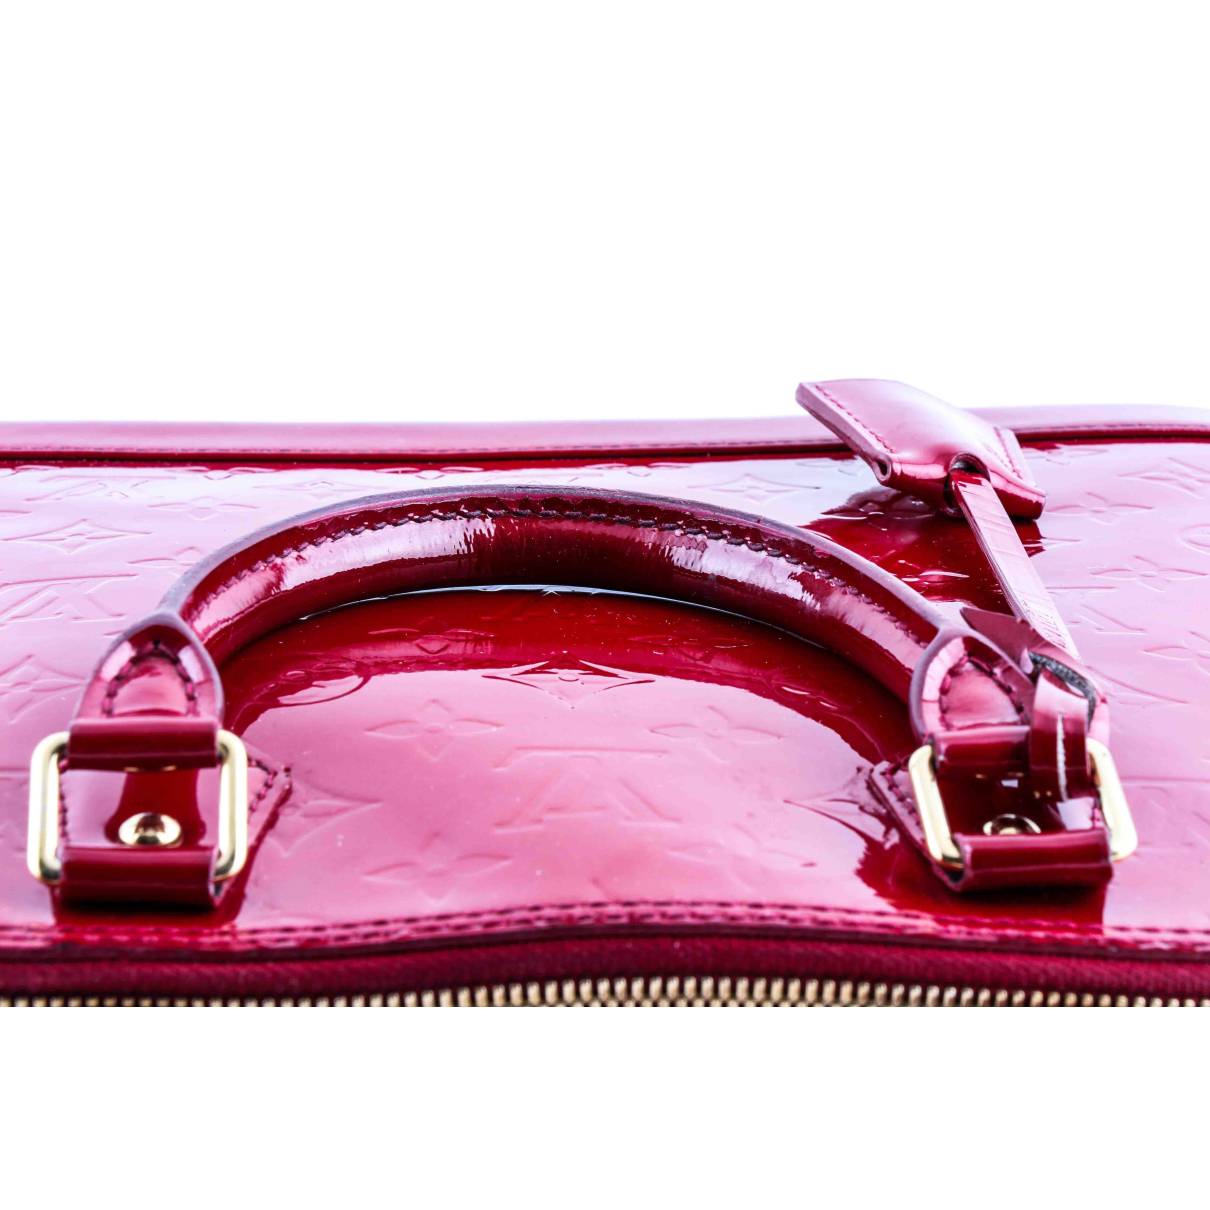 Louis Vuitton Alma handbag in red patent leather, mono…